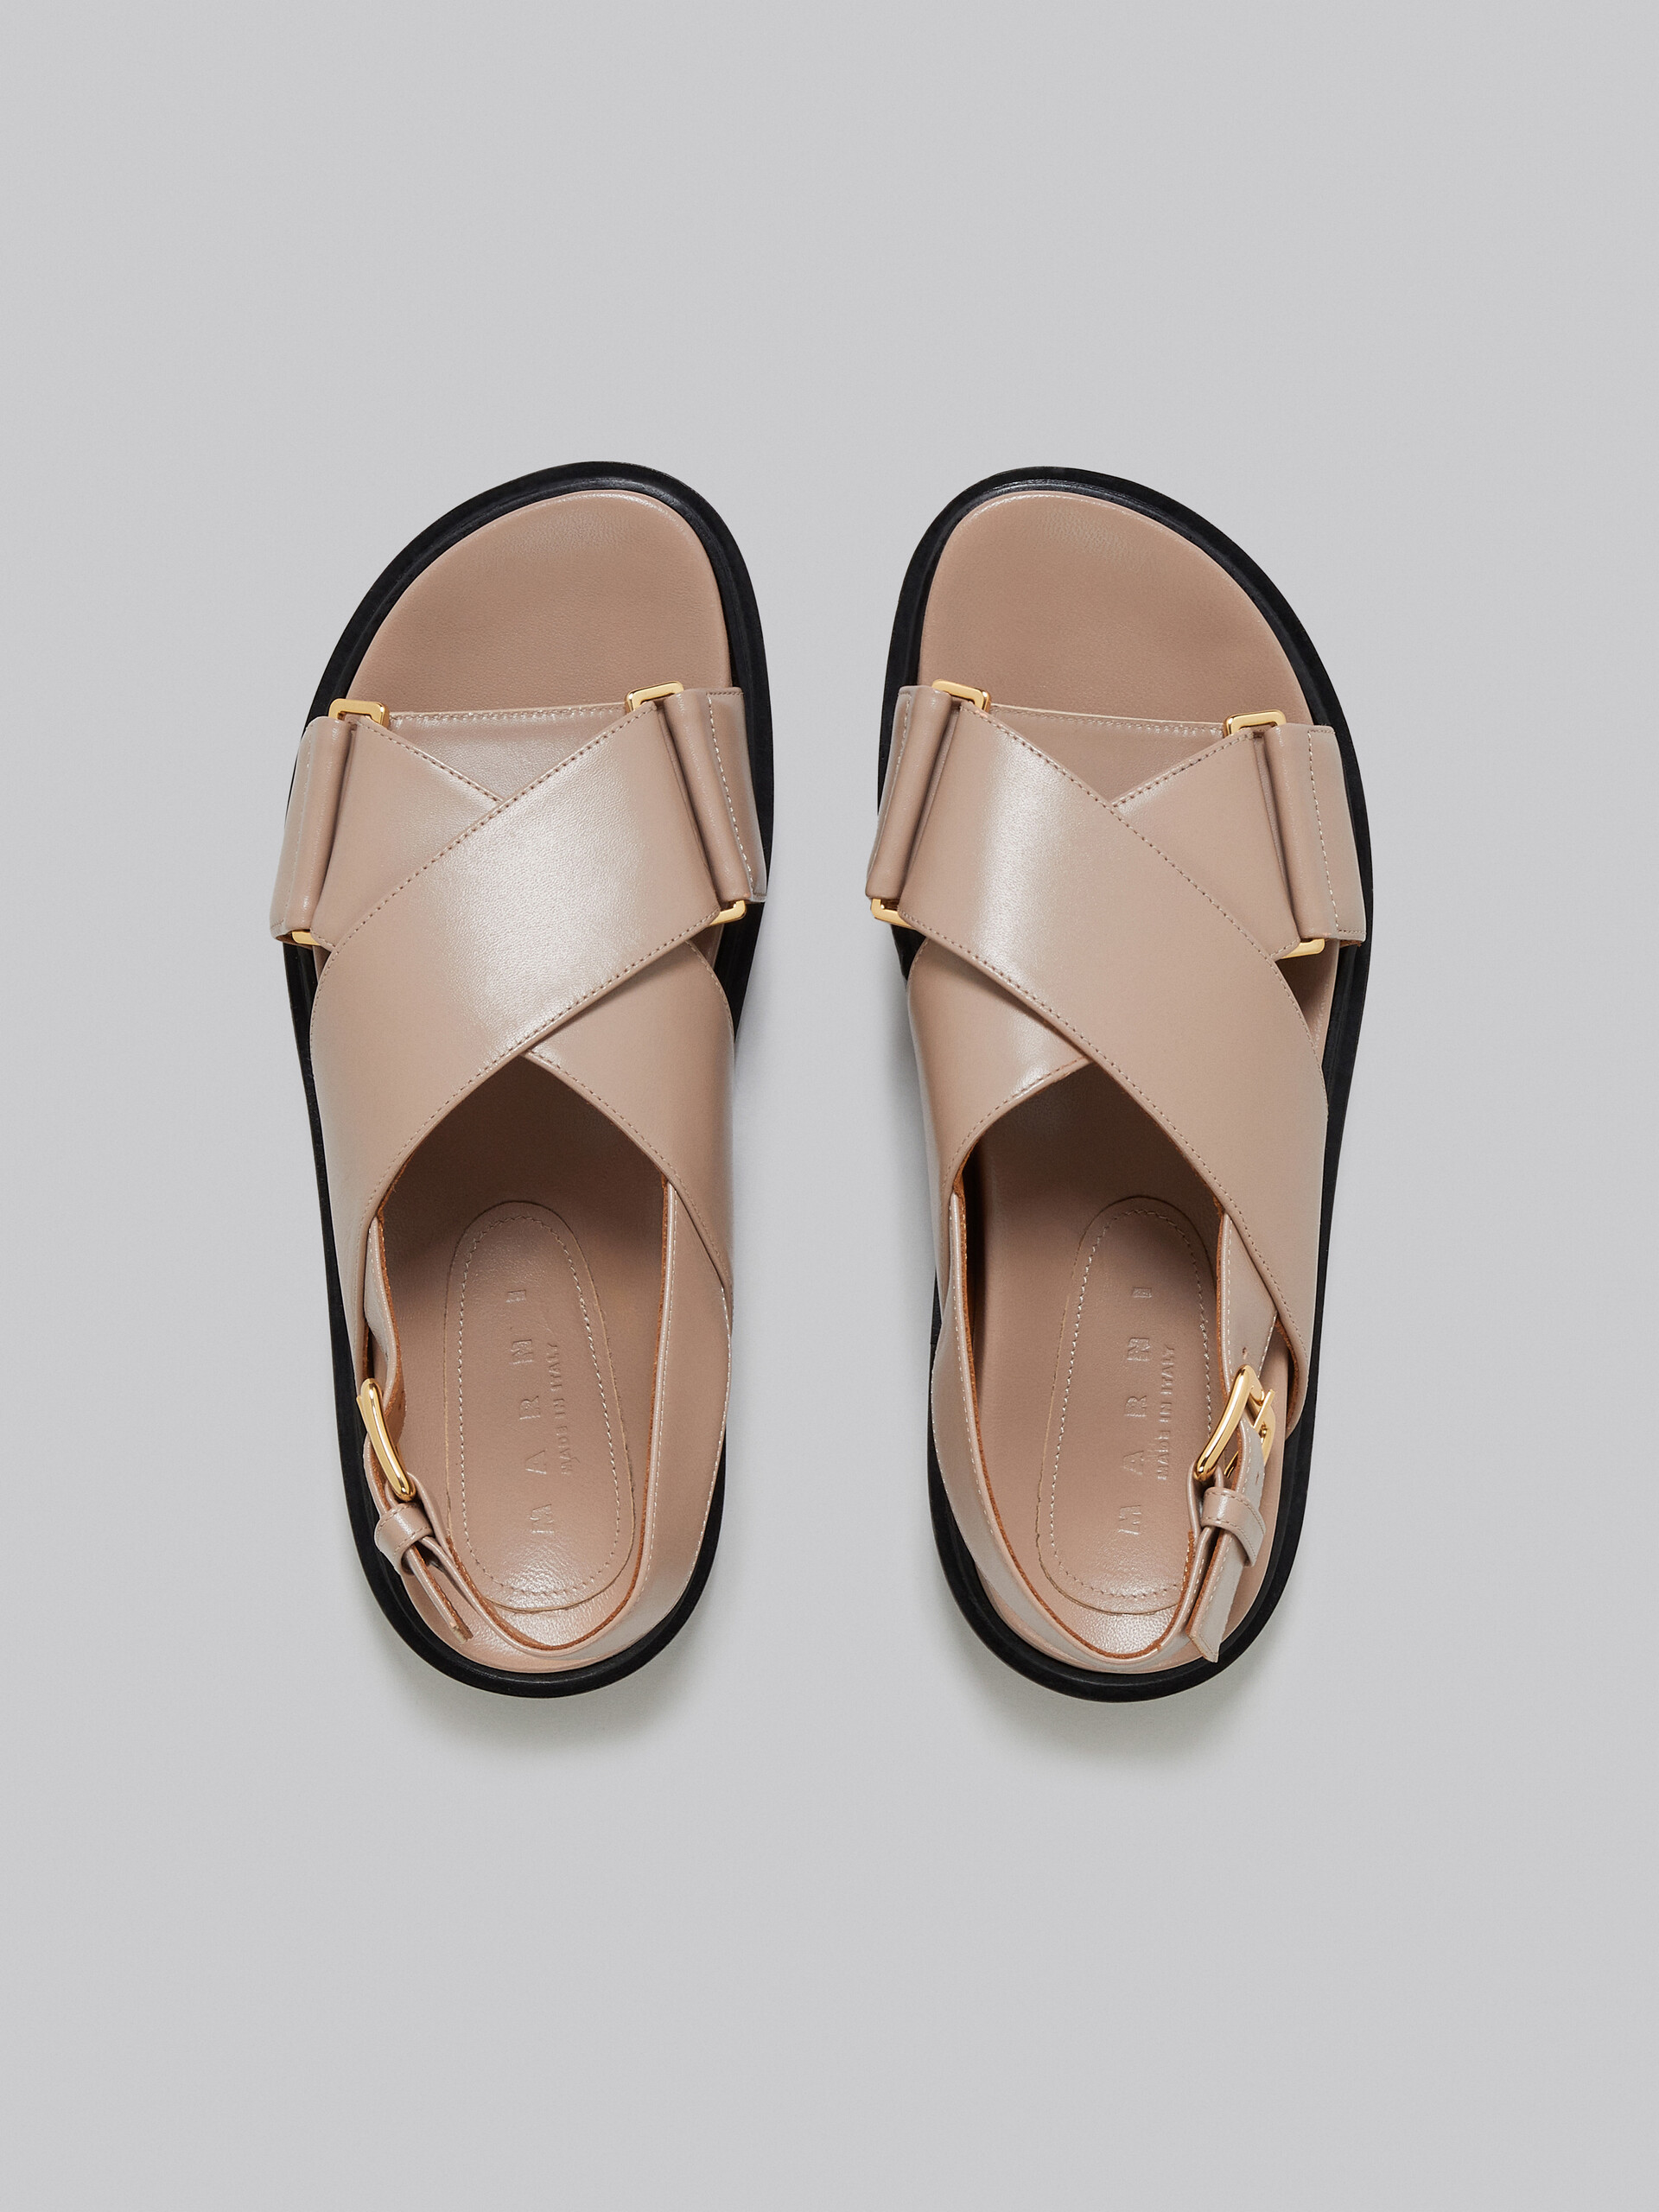 Beige leather Fussbett - Sandals - Image 4